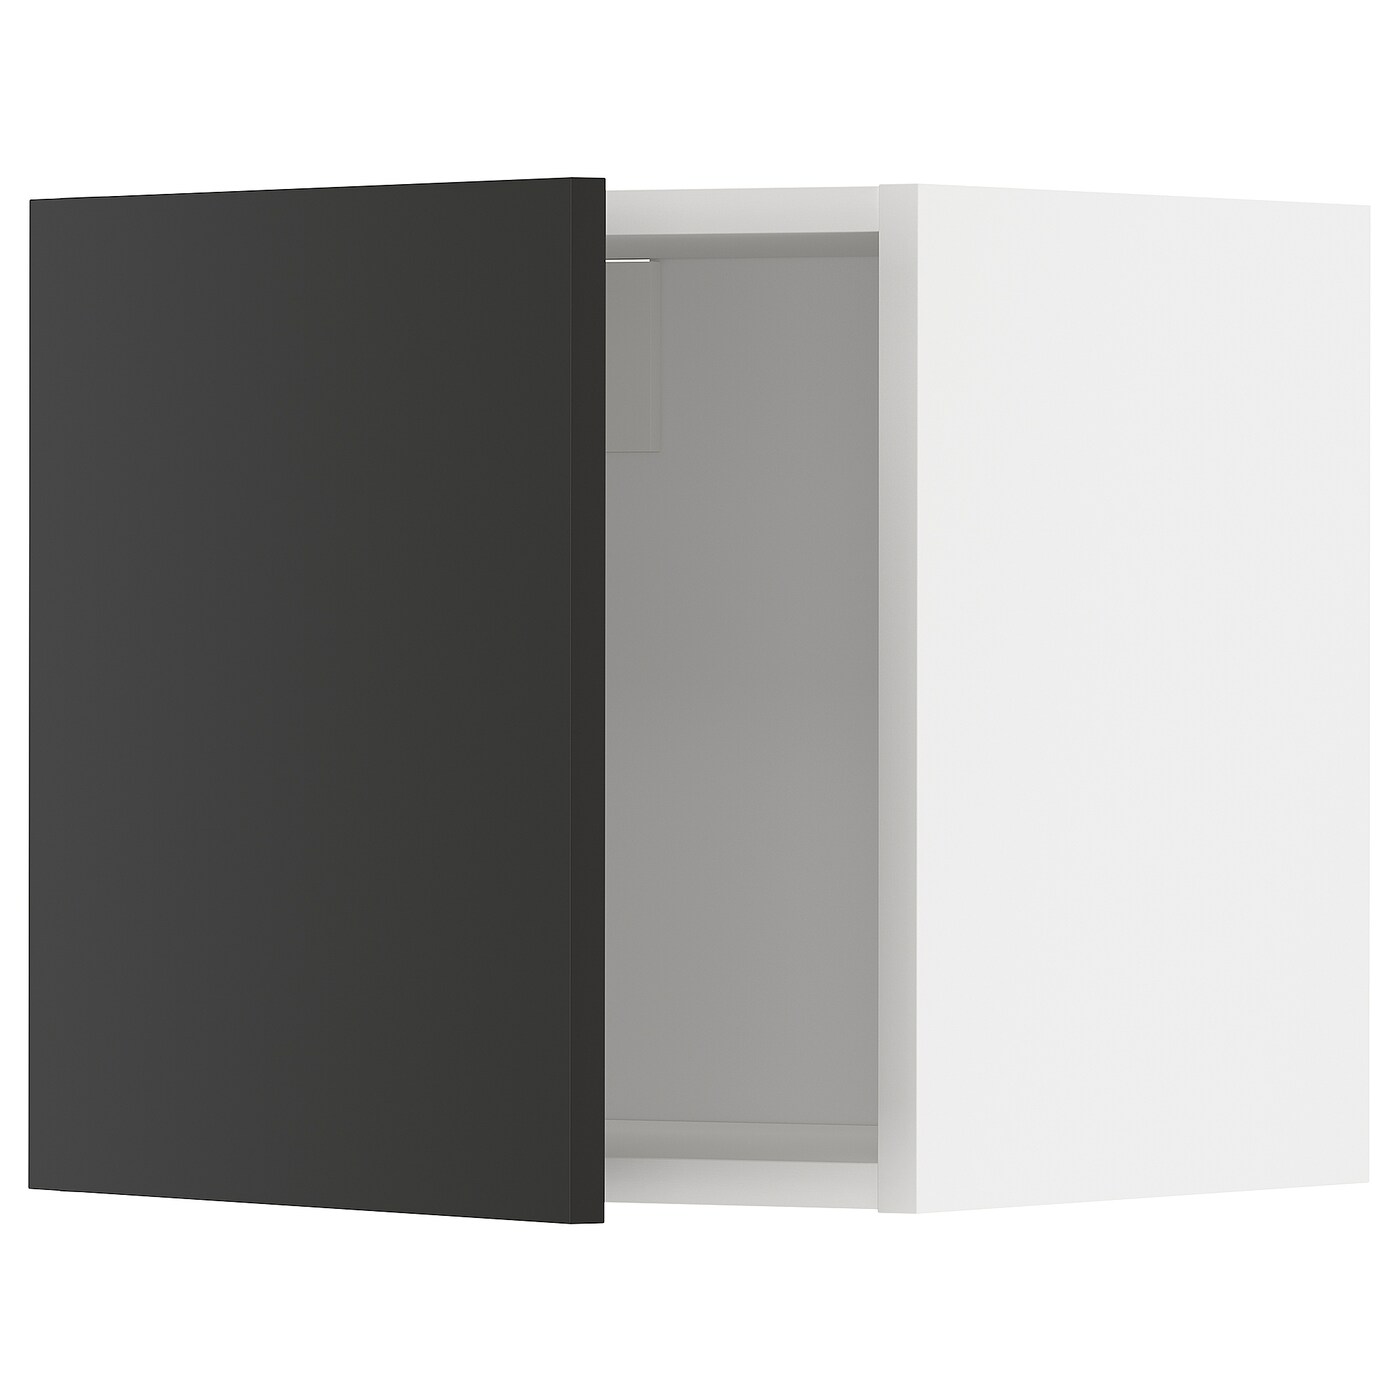 METOD Навесной шкаф - METOD IKEA/ МЕТОД ИКЕА, 40х40 см, черный/белый